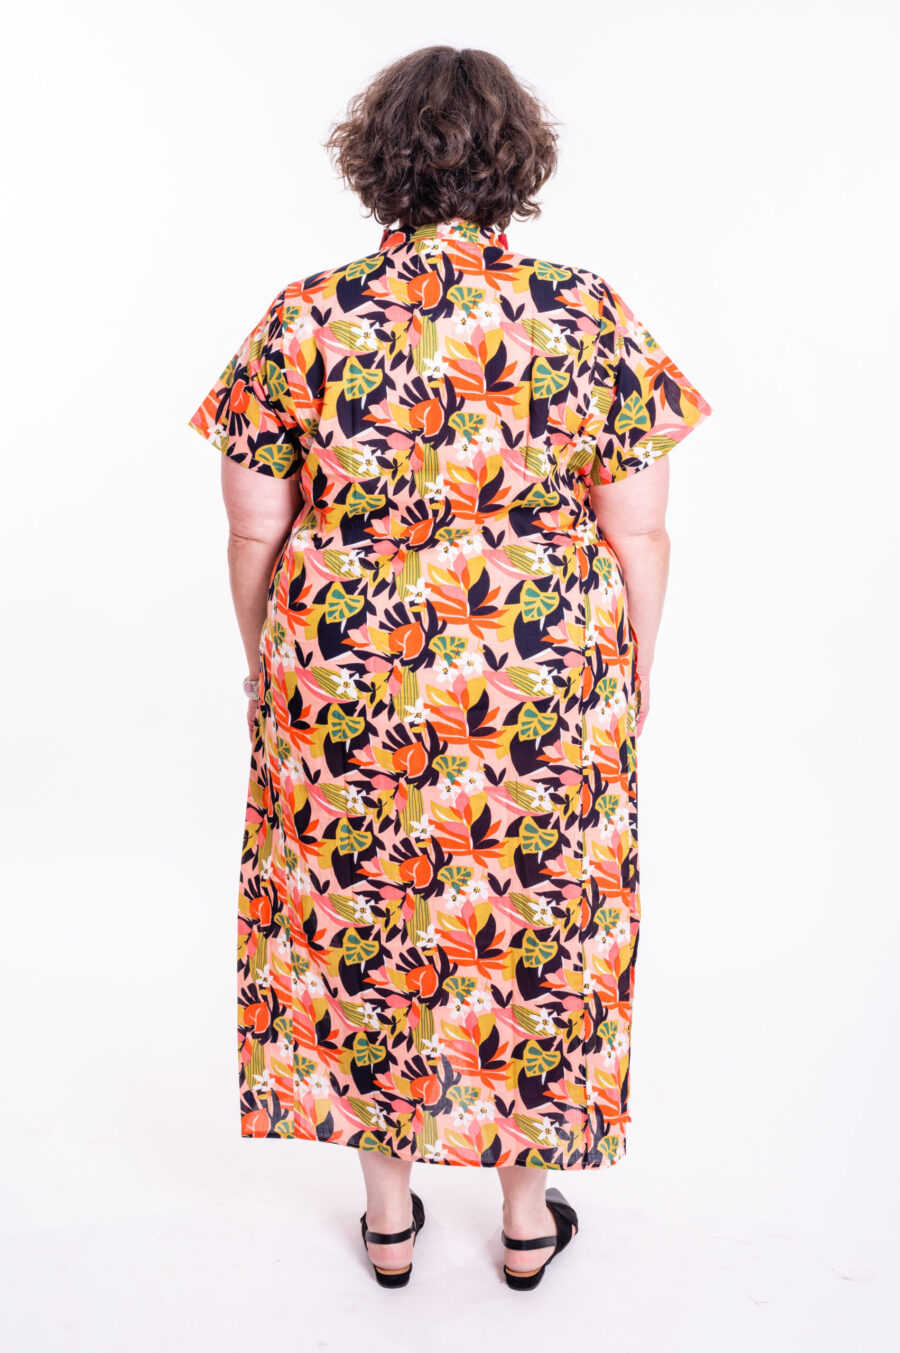 Jalabiya dress | Uniquely designed dress – light orange dress with tropical print